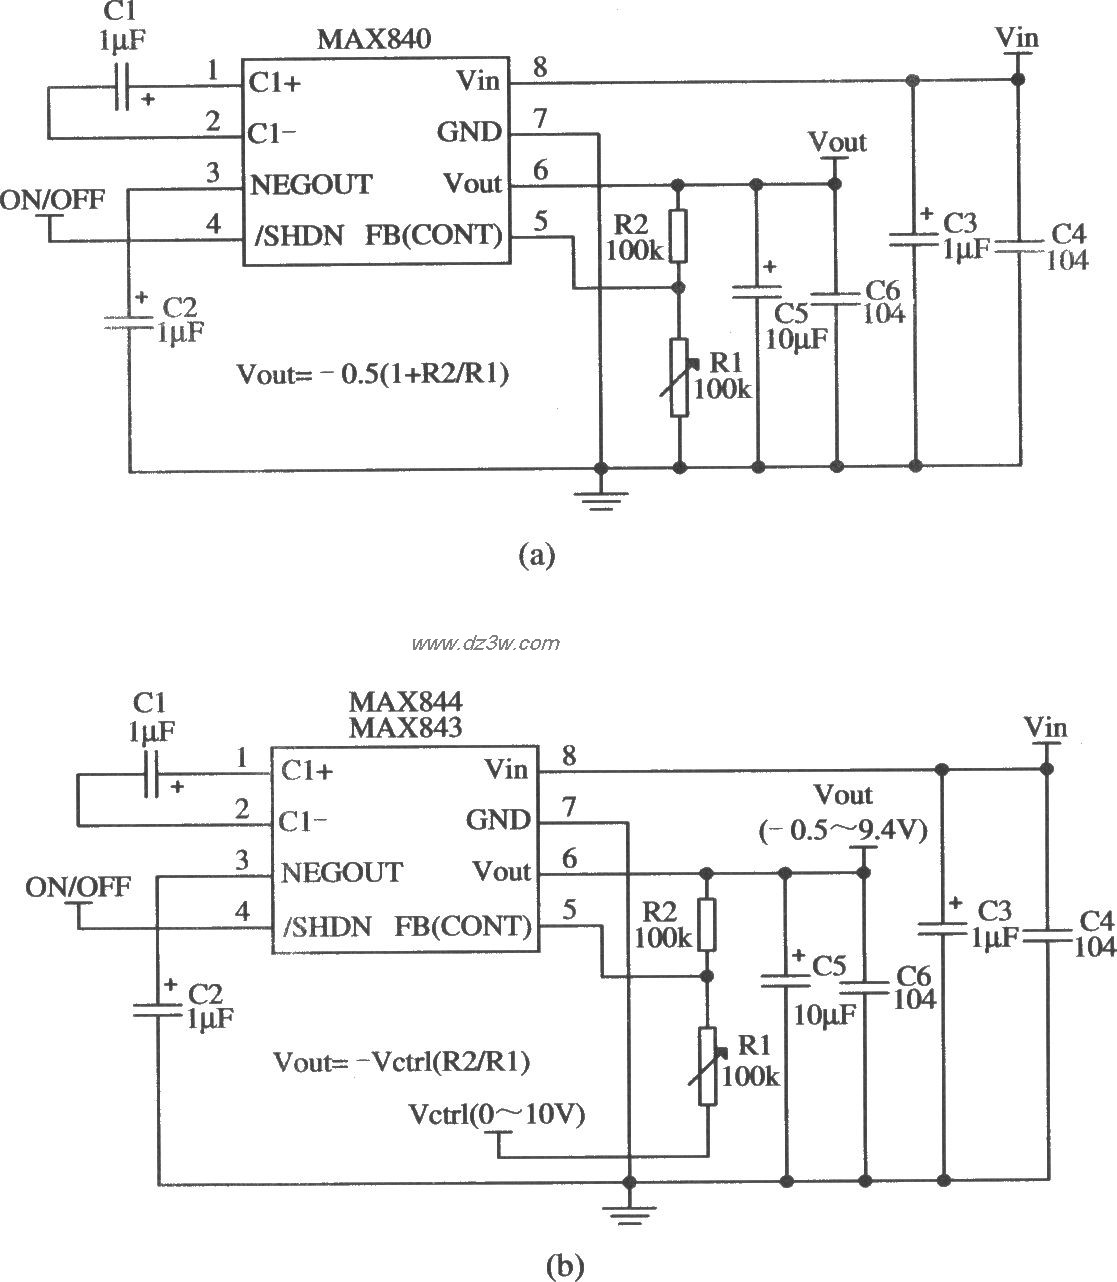 MAX840/MAX843構成輸出電壓連續可調的應用電路